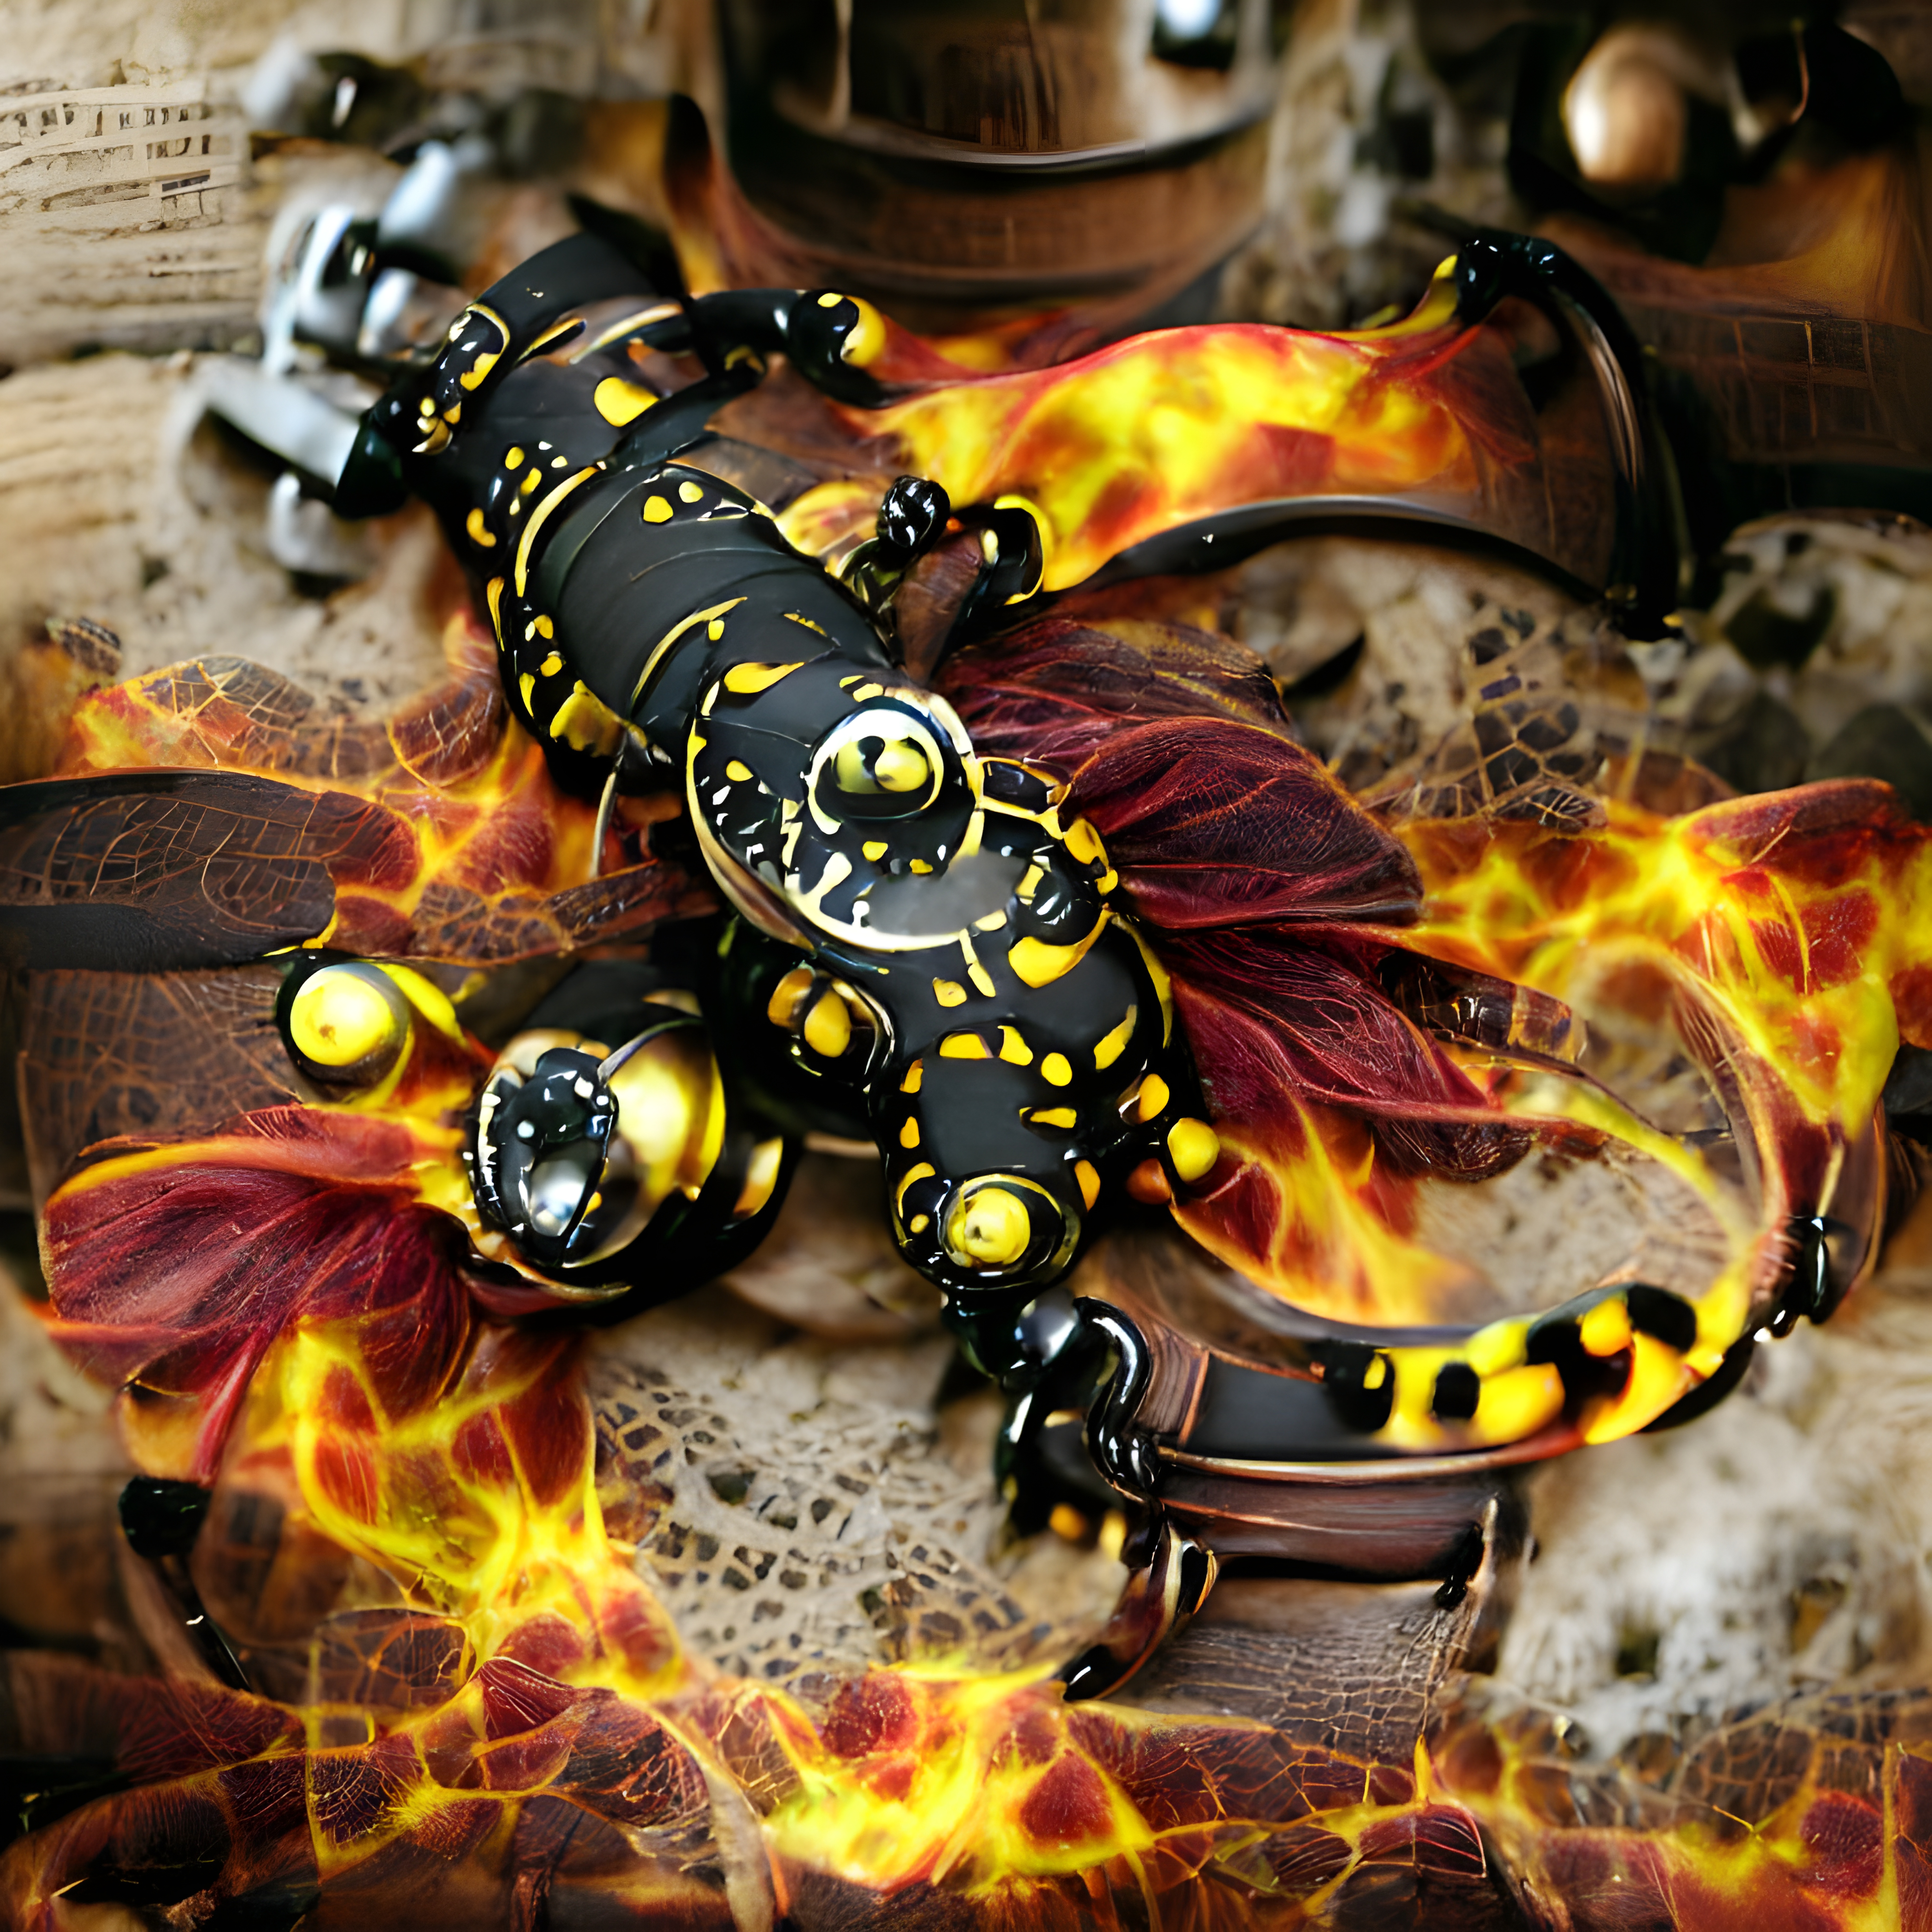 The Fire Salamander